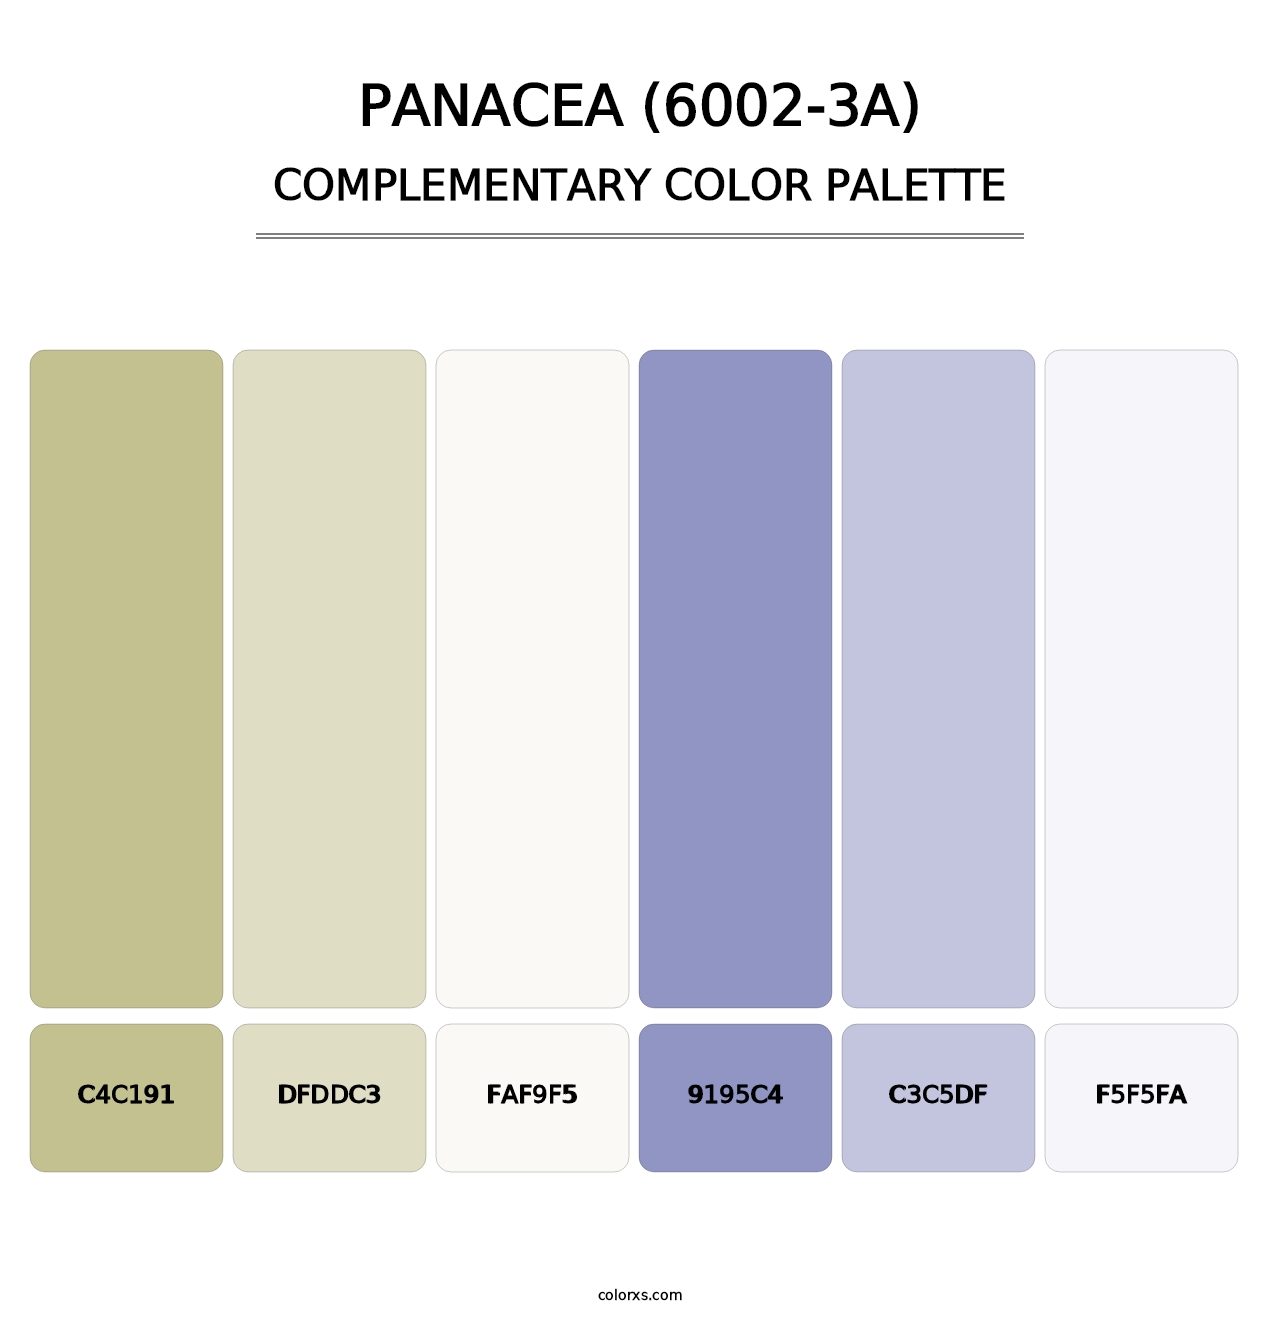 Panacea (6002-3A) - Complementary Color Palette